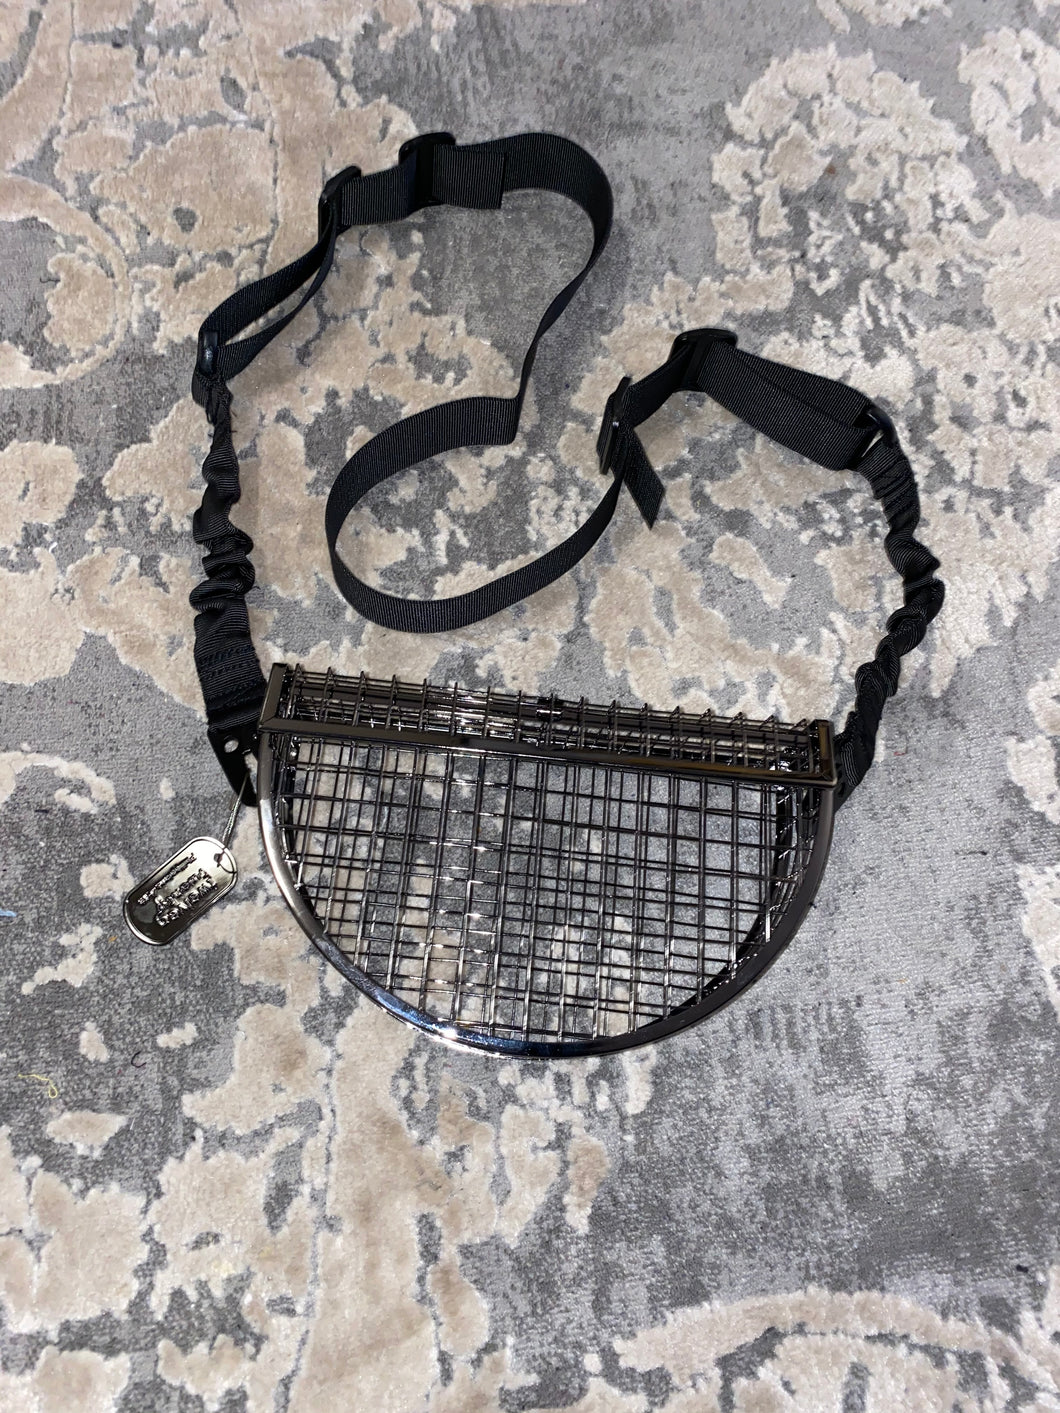 Ultra-Mod Convertible Caged Wire Half Moon Purse - Fabric Belt Strap w/ Dog Tag Keychain Clutch Bag